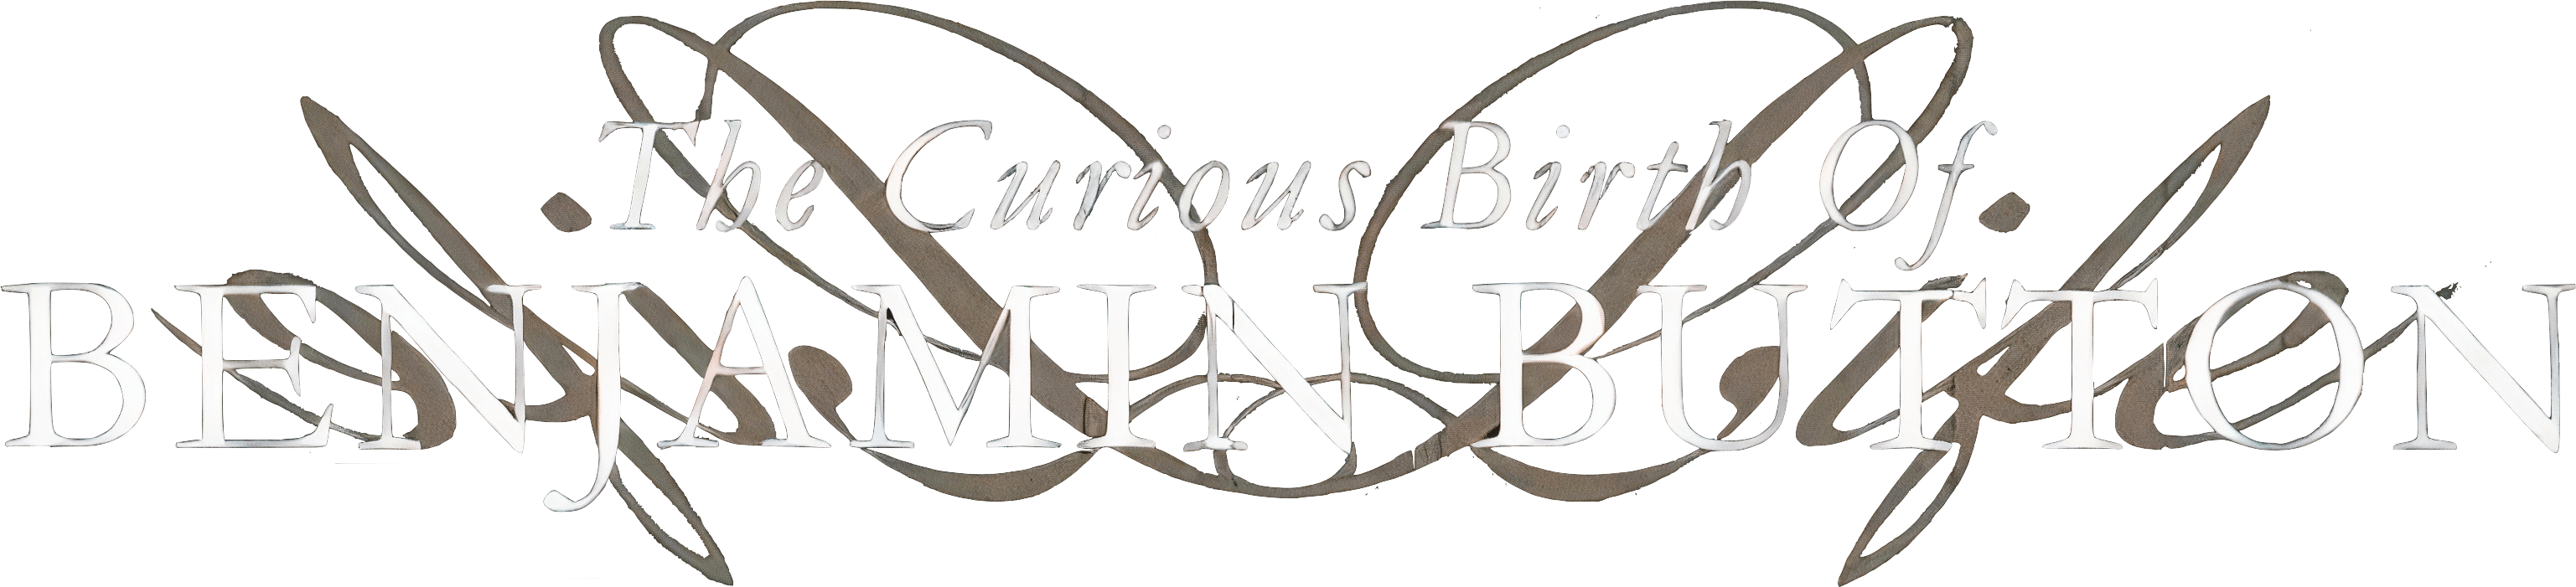 The Curious Birth of Benjamin Button logo